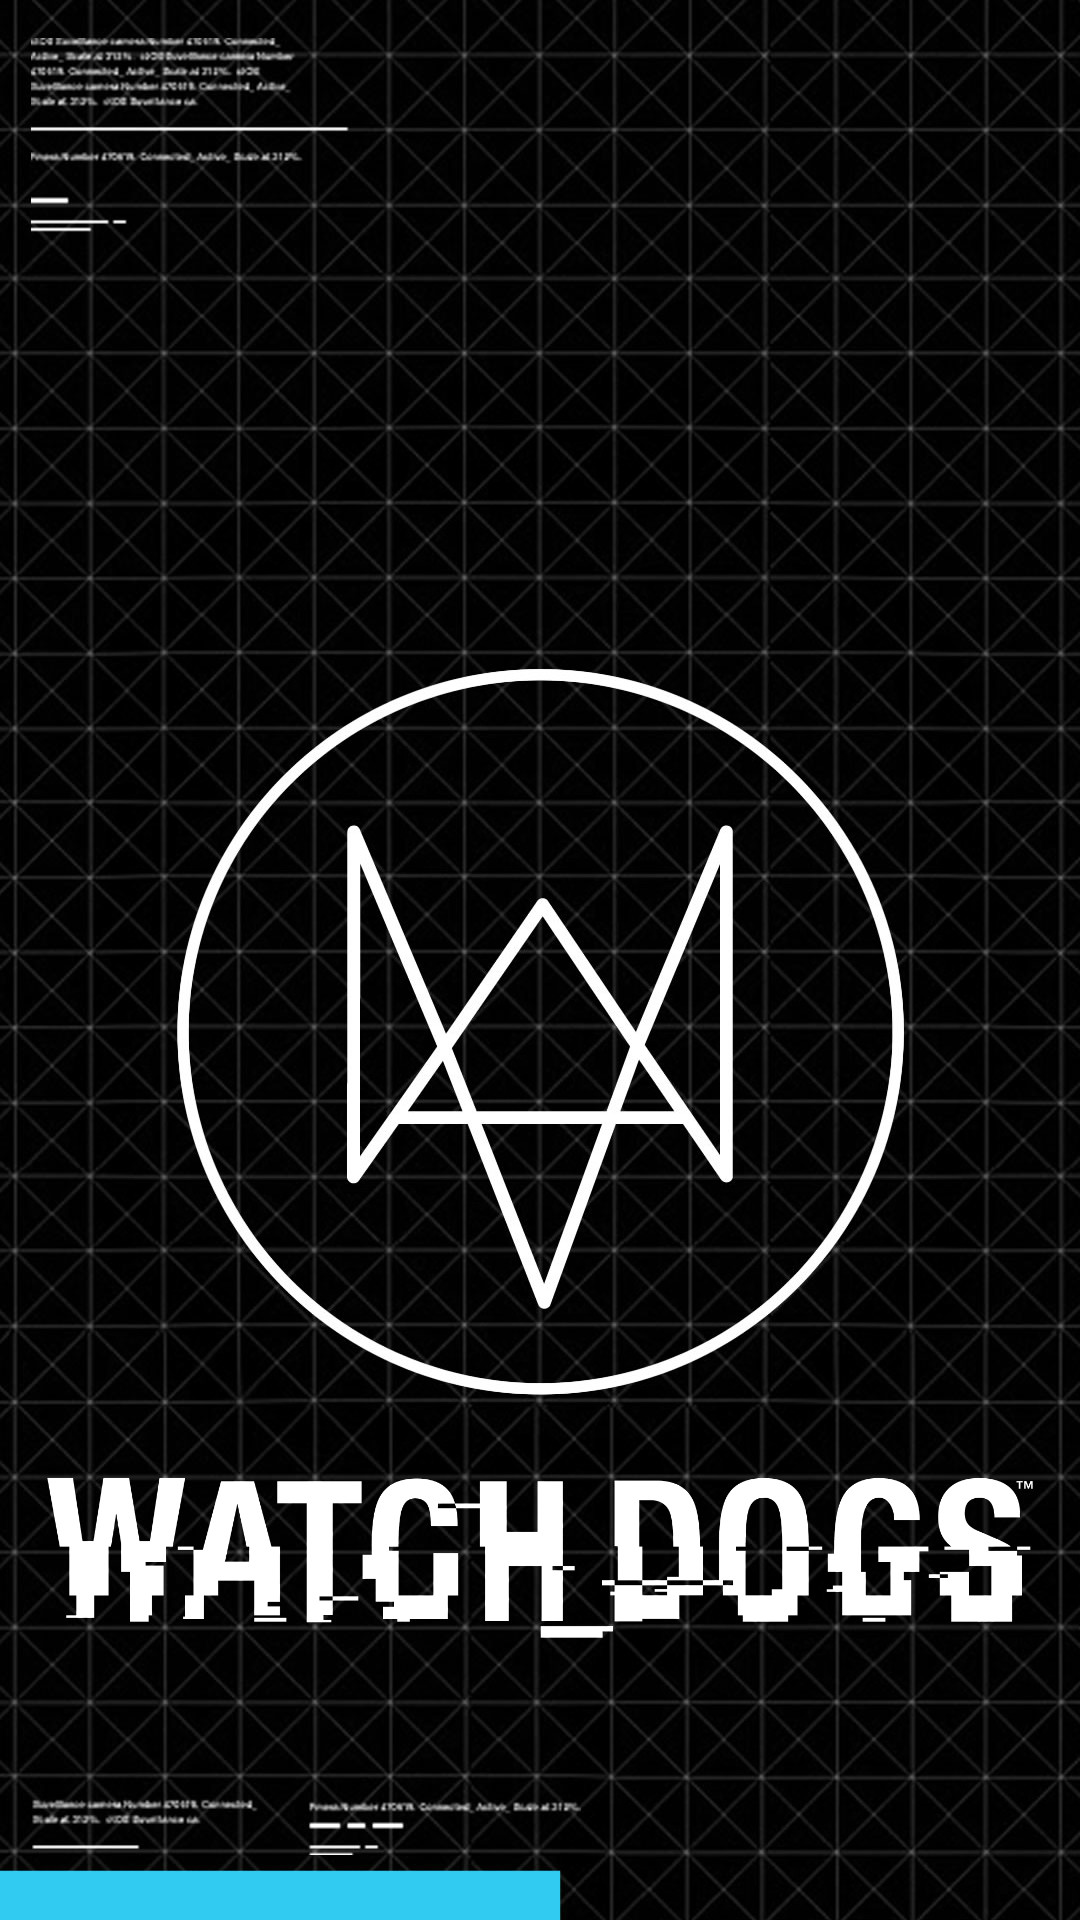 Watch Dogs Galaxy S4 lockscreen wallpapers that I made enjoy gaming